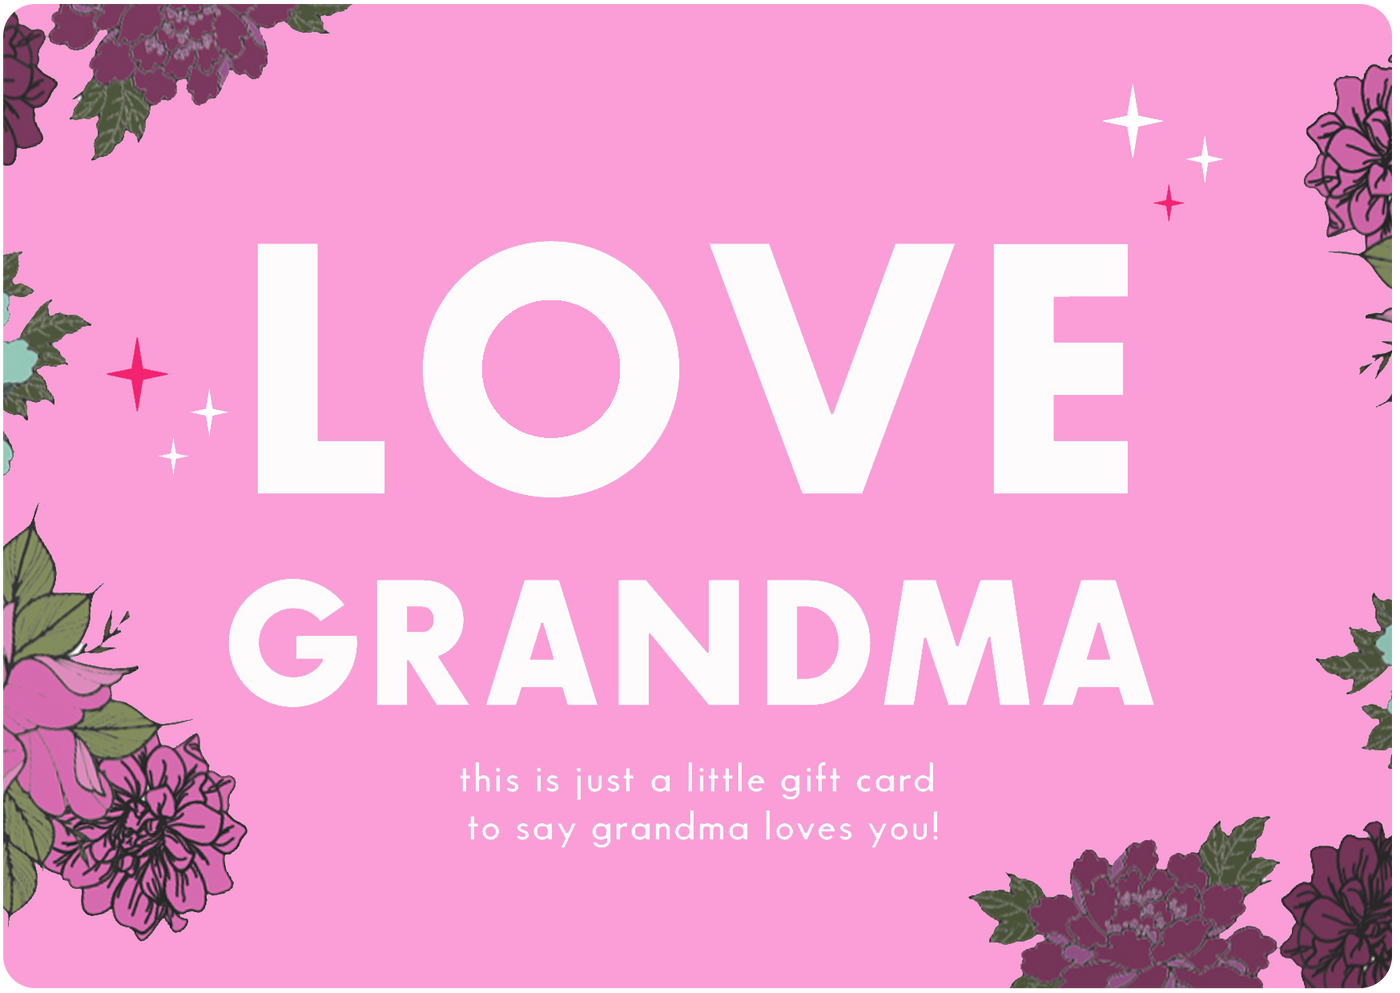 Canadian Dollar Gift Card -Love Grandma